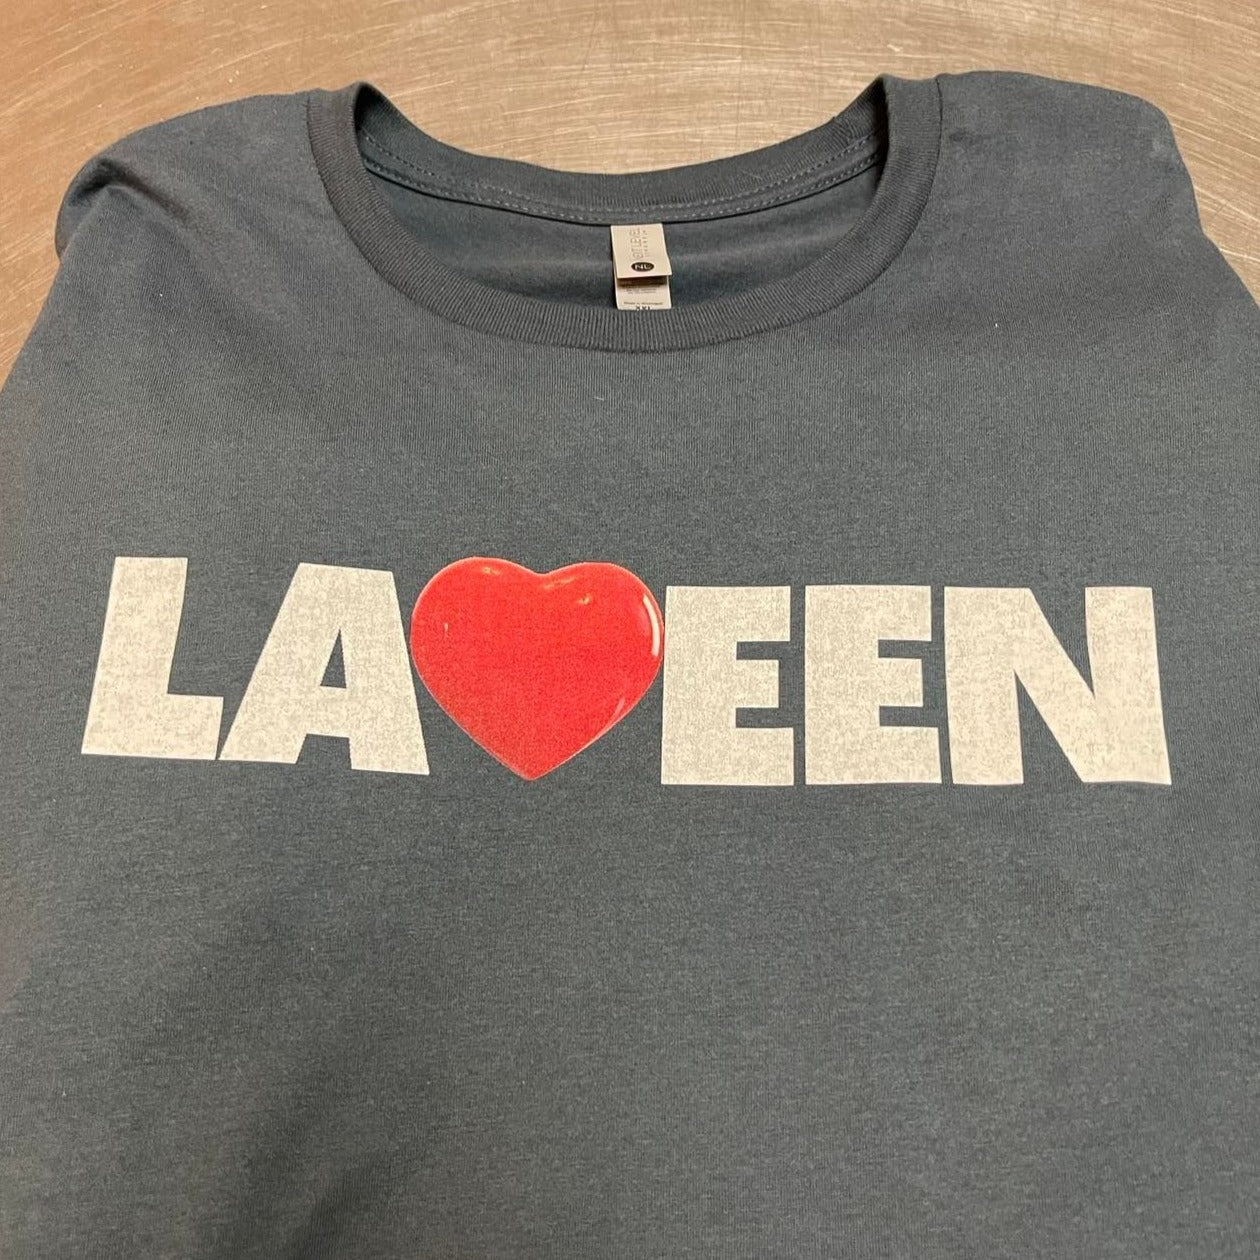 Laveen Heart Tshirt